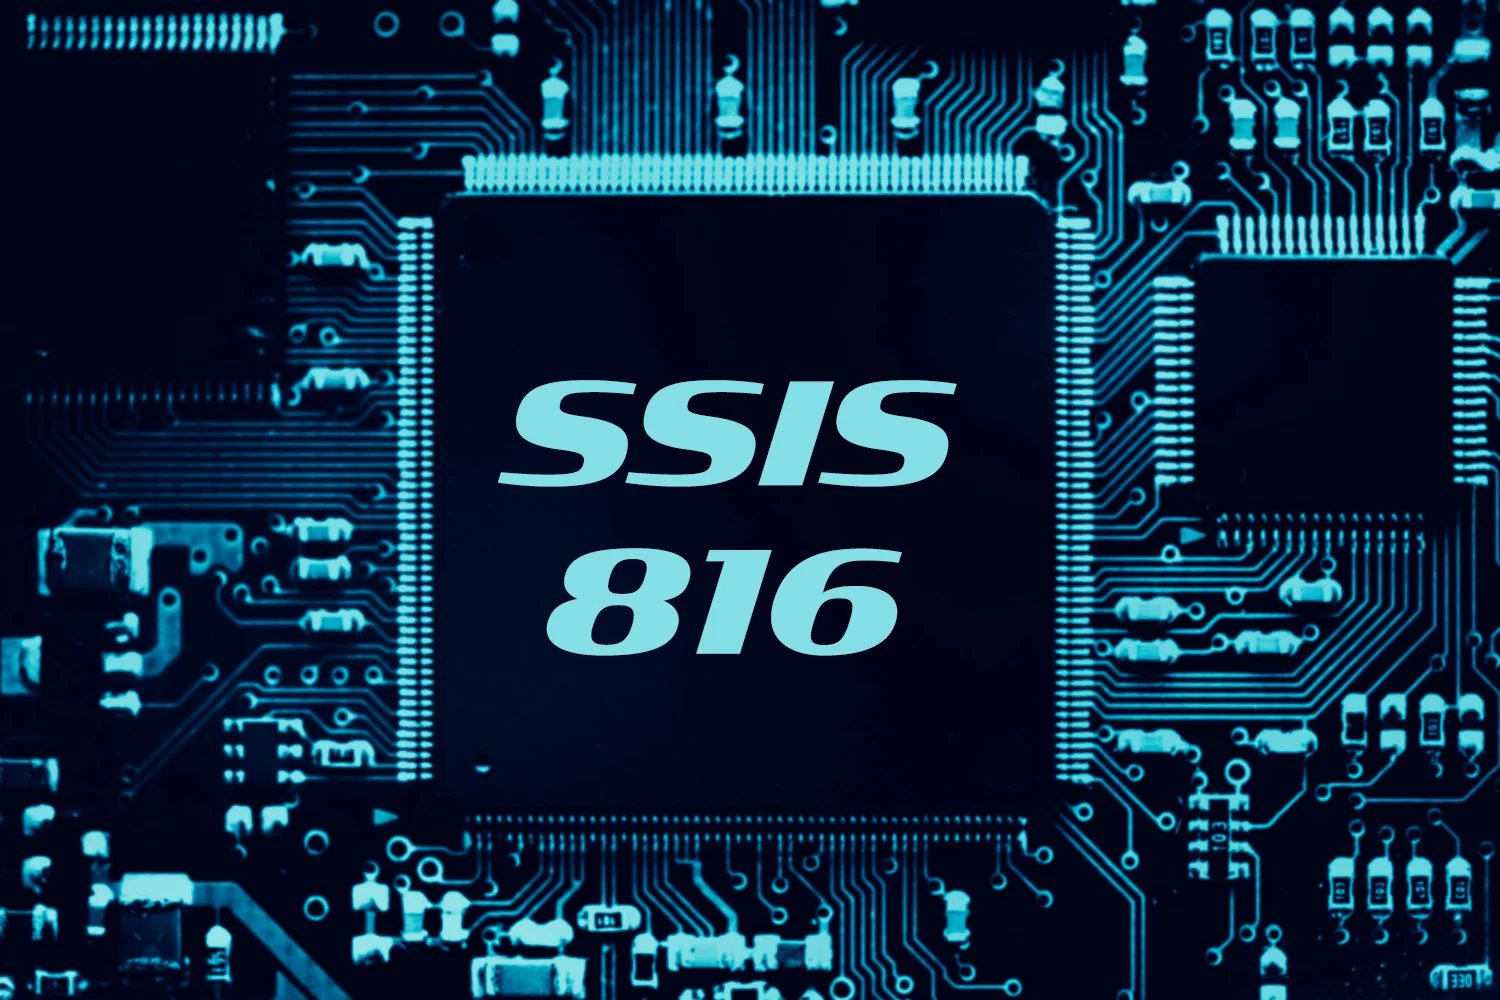 Role-SSIS-816-Modern-Technology